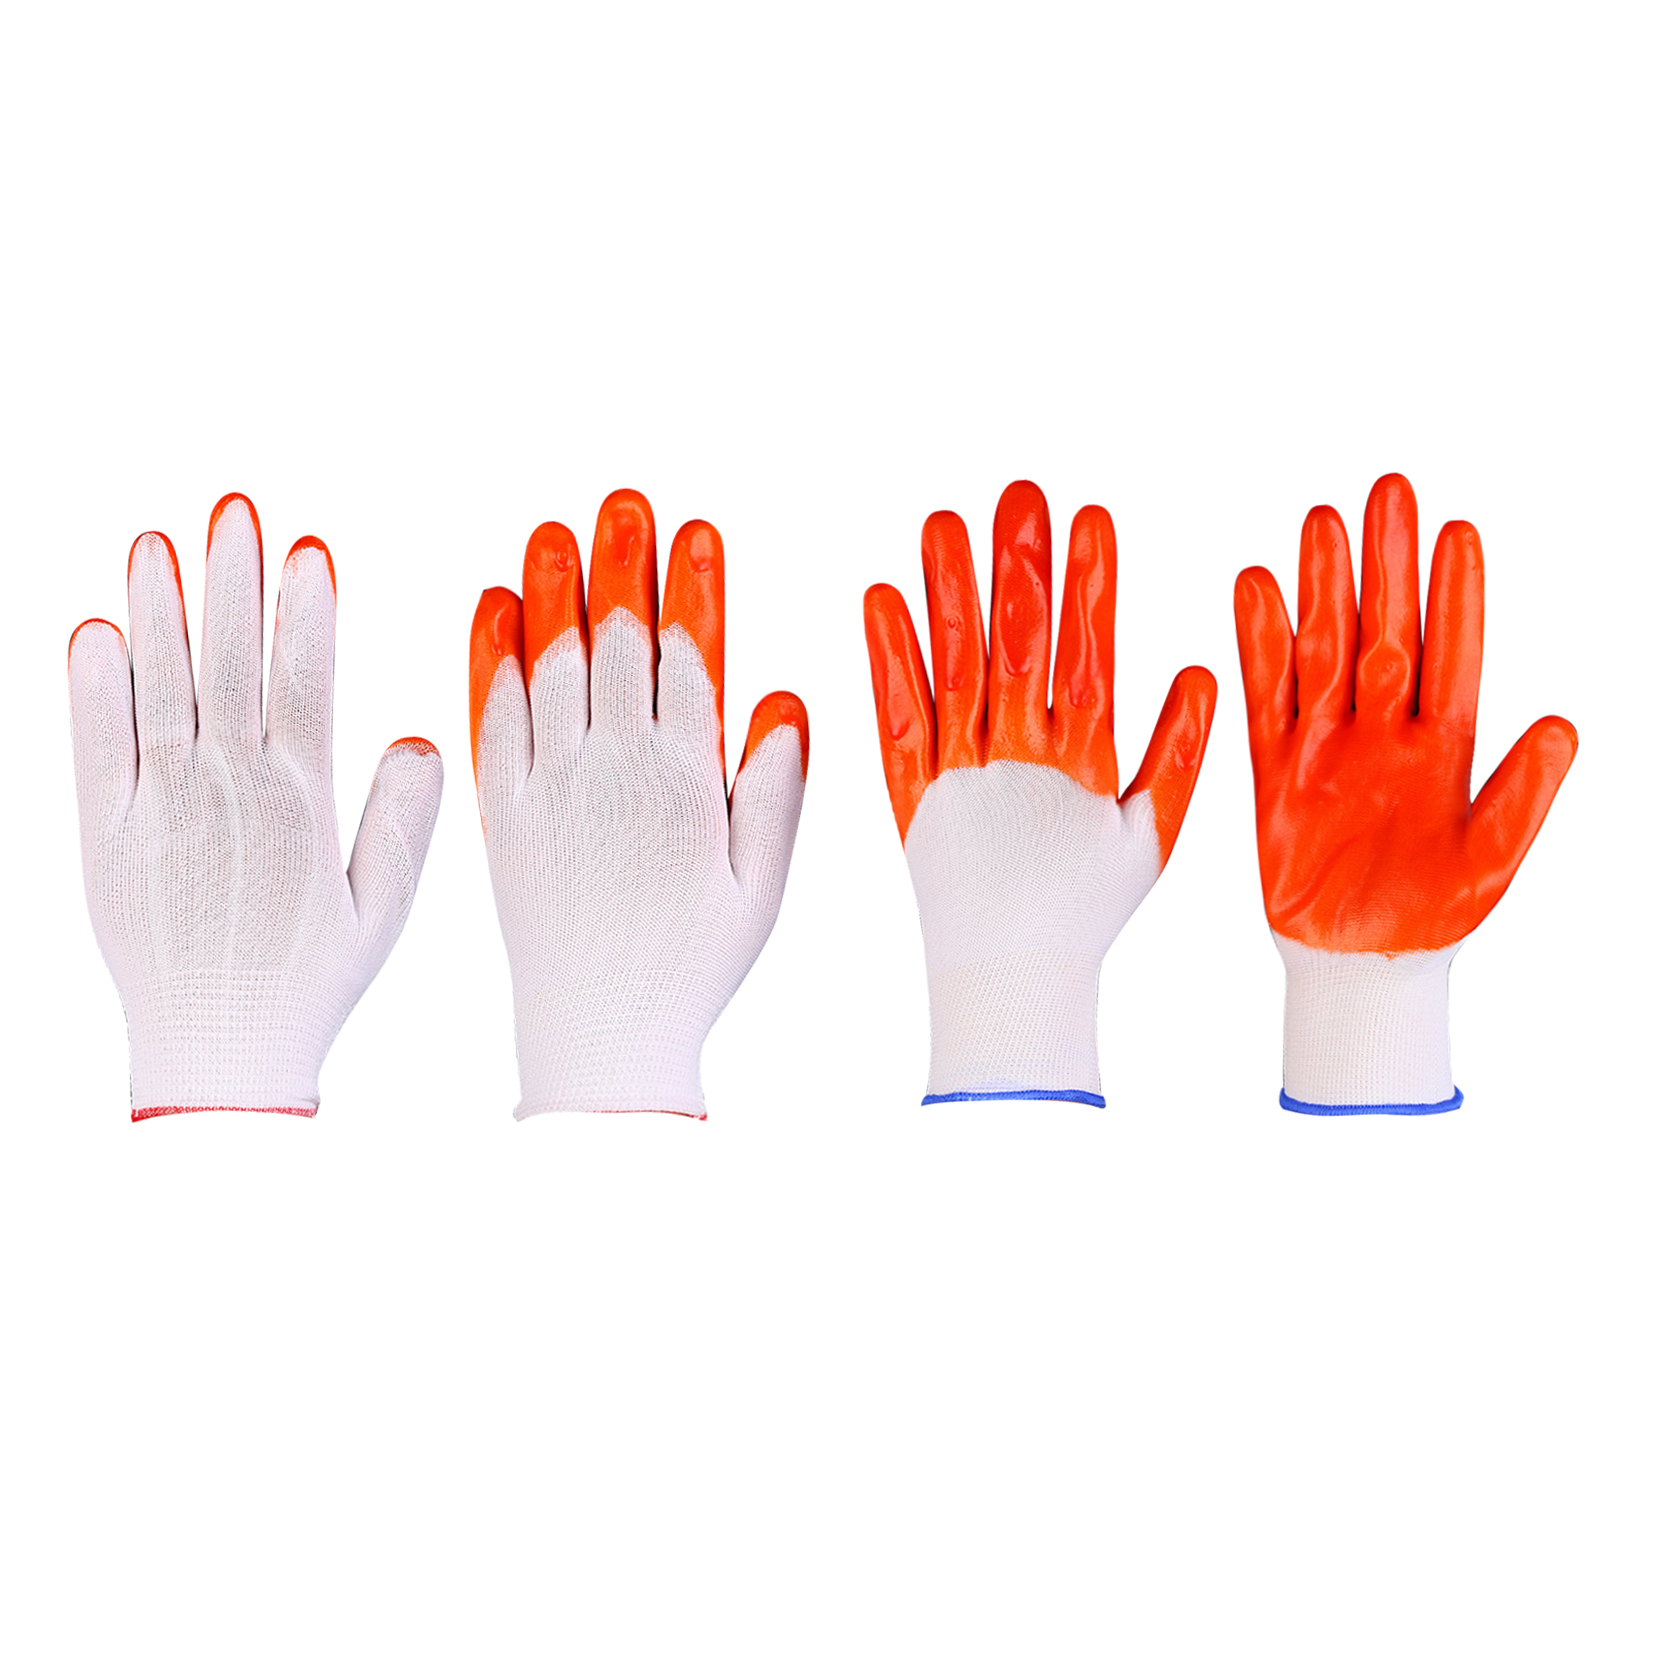 Pvc Coated Orange Nylon Knitted Protective Safety Opus Glove